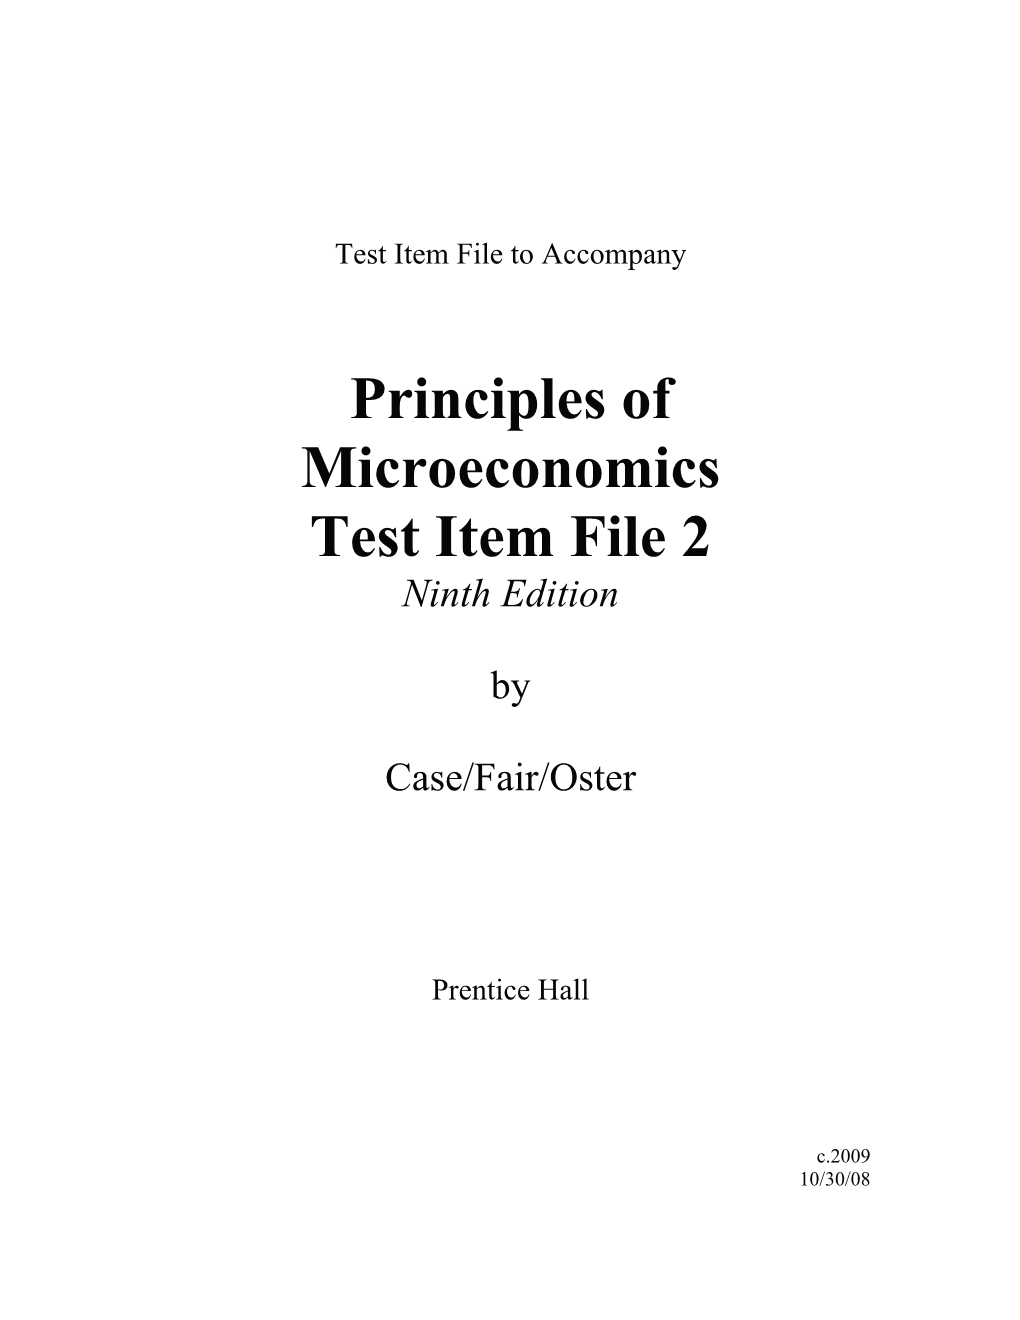 Principles of Microeconomics Test Item File 2 Ninth Edition